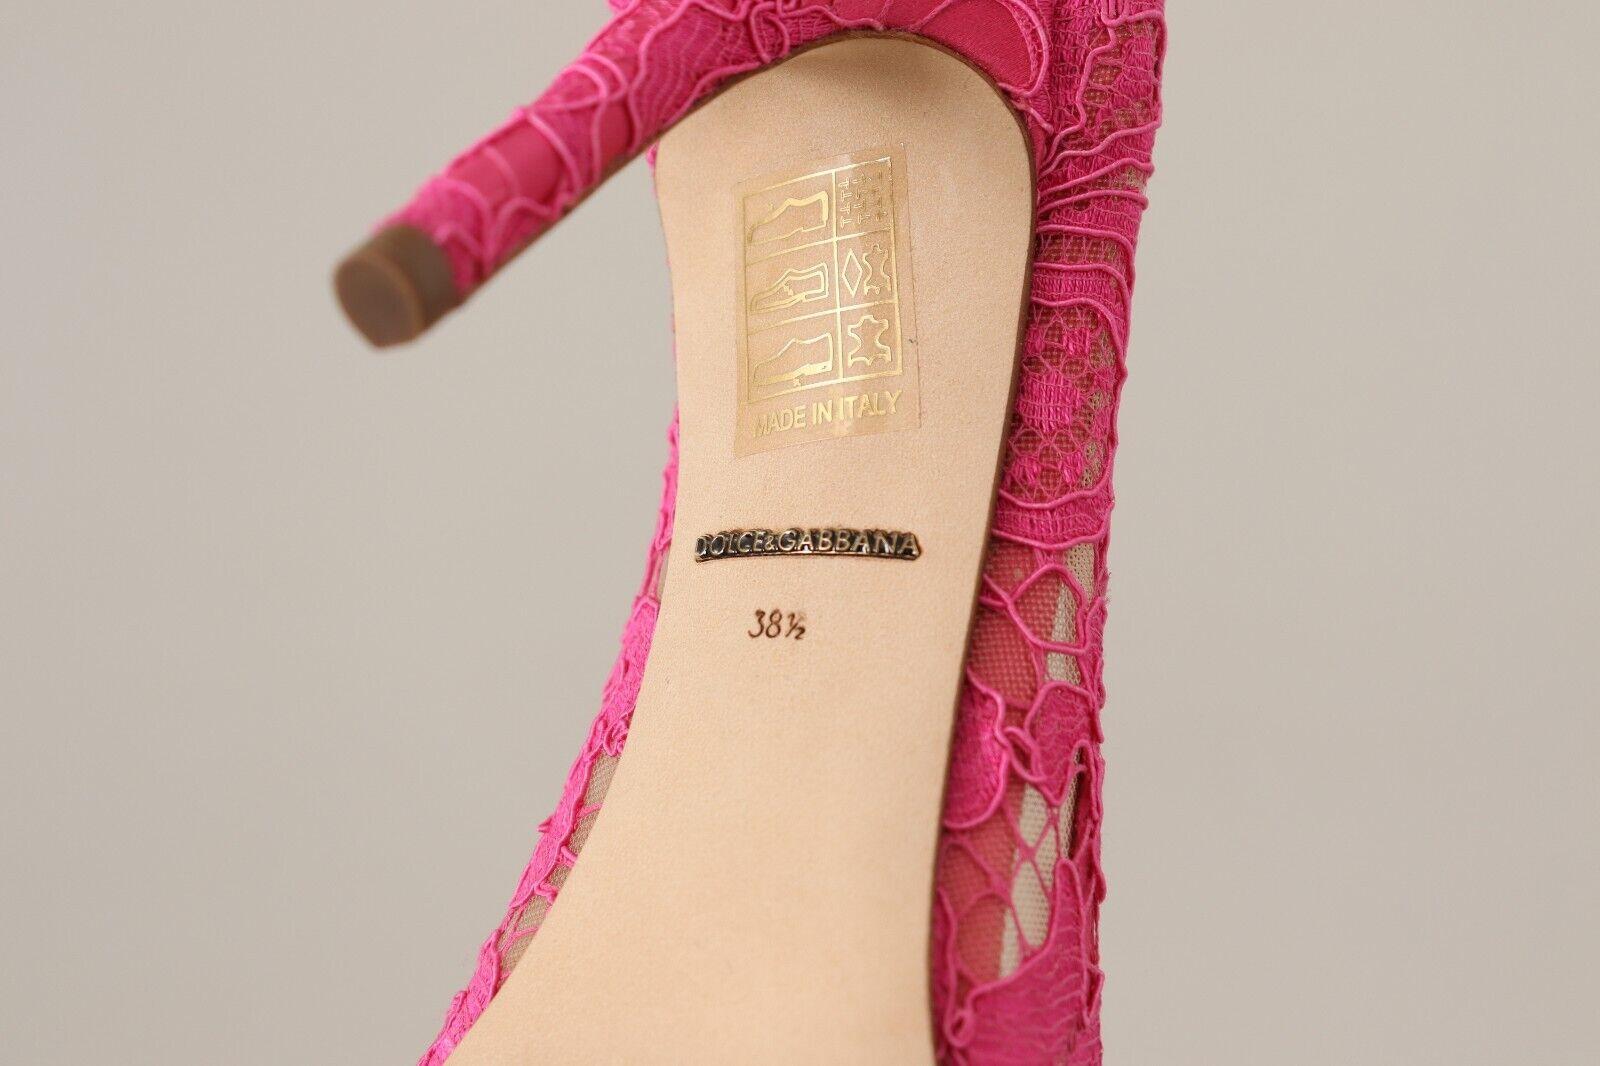 Dolce & Gabbana Pink Lace Leather Bellucci Shoes Heels Pumps Floral DG Crystals 1